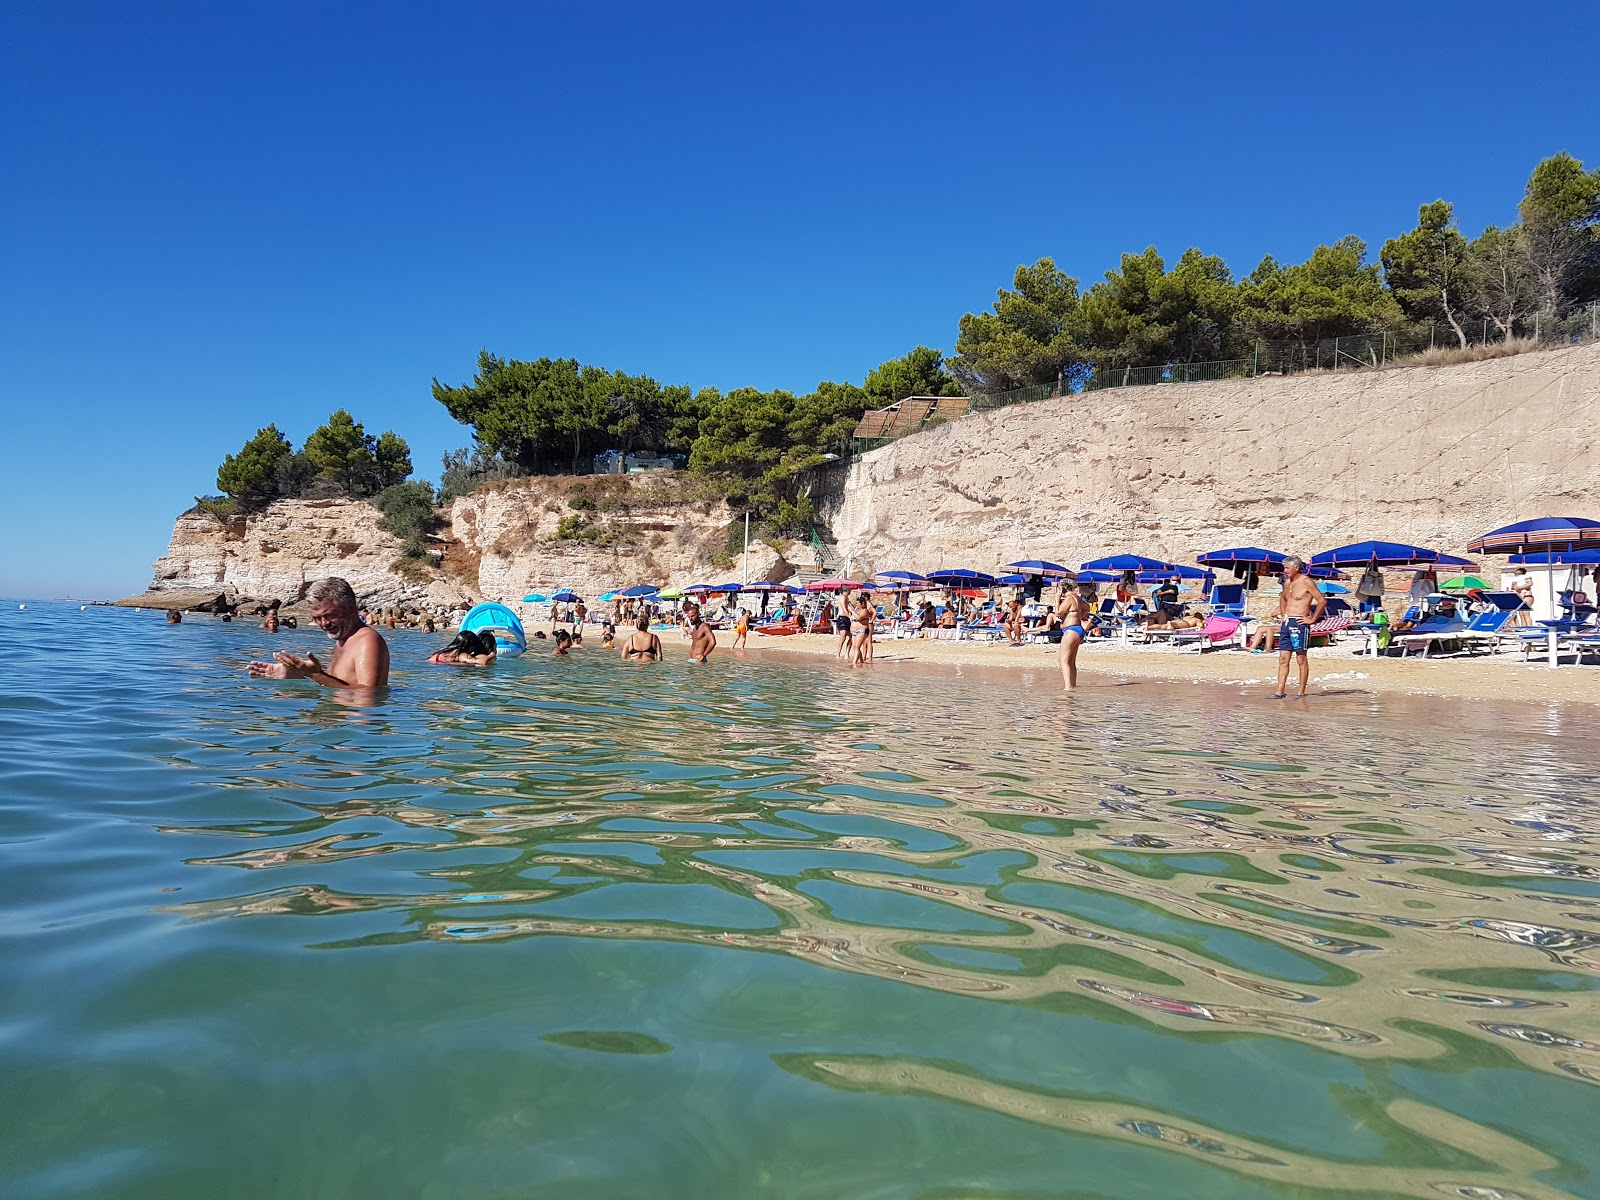 Photo of Spiaggia di Varcaro located in natural area